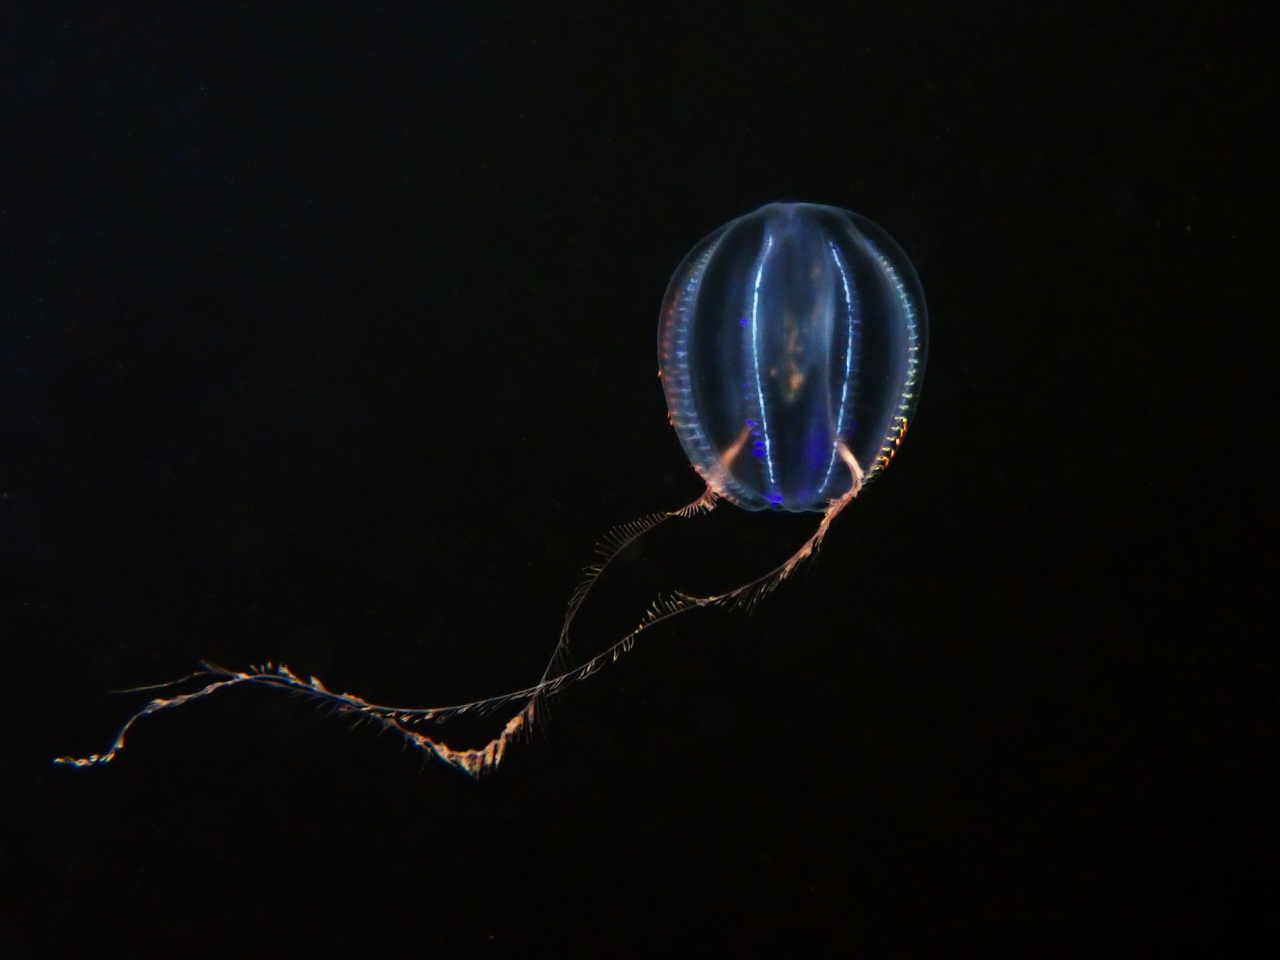 Jellyfish swiming through the water.